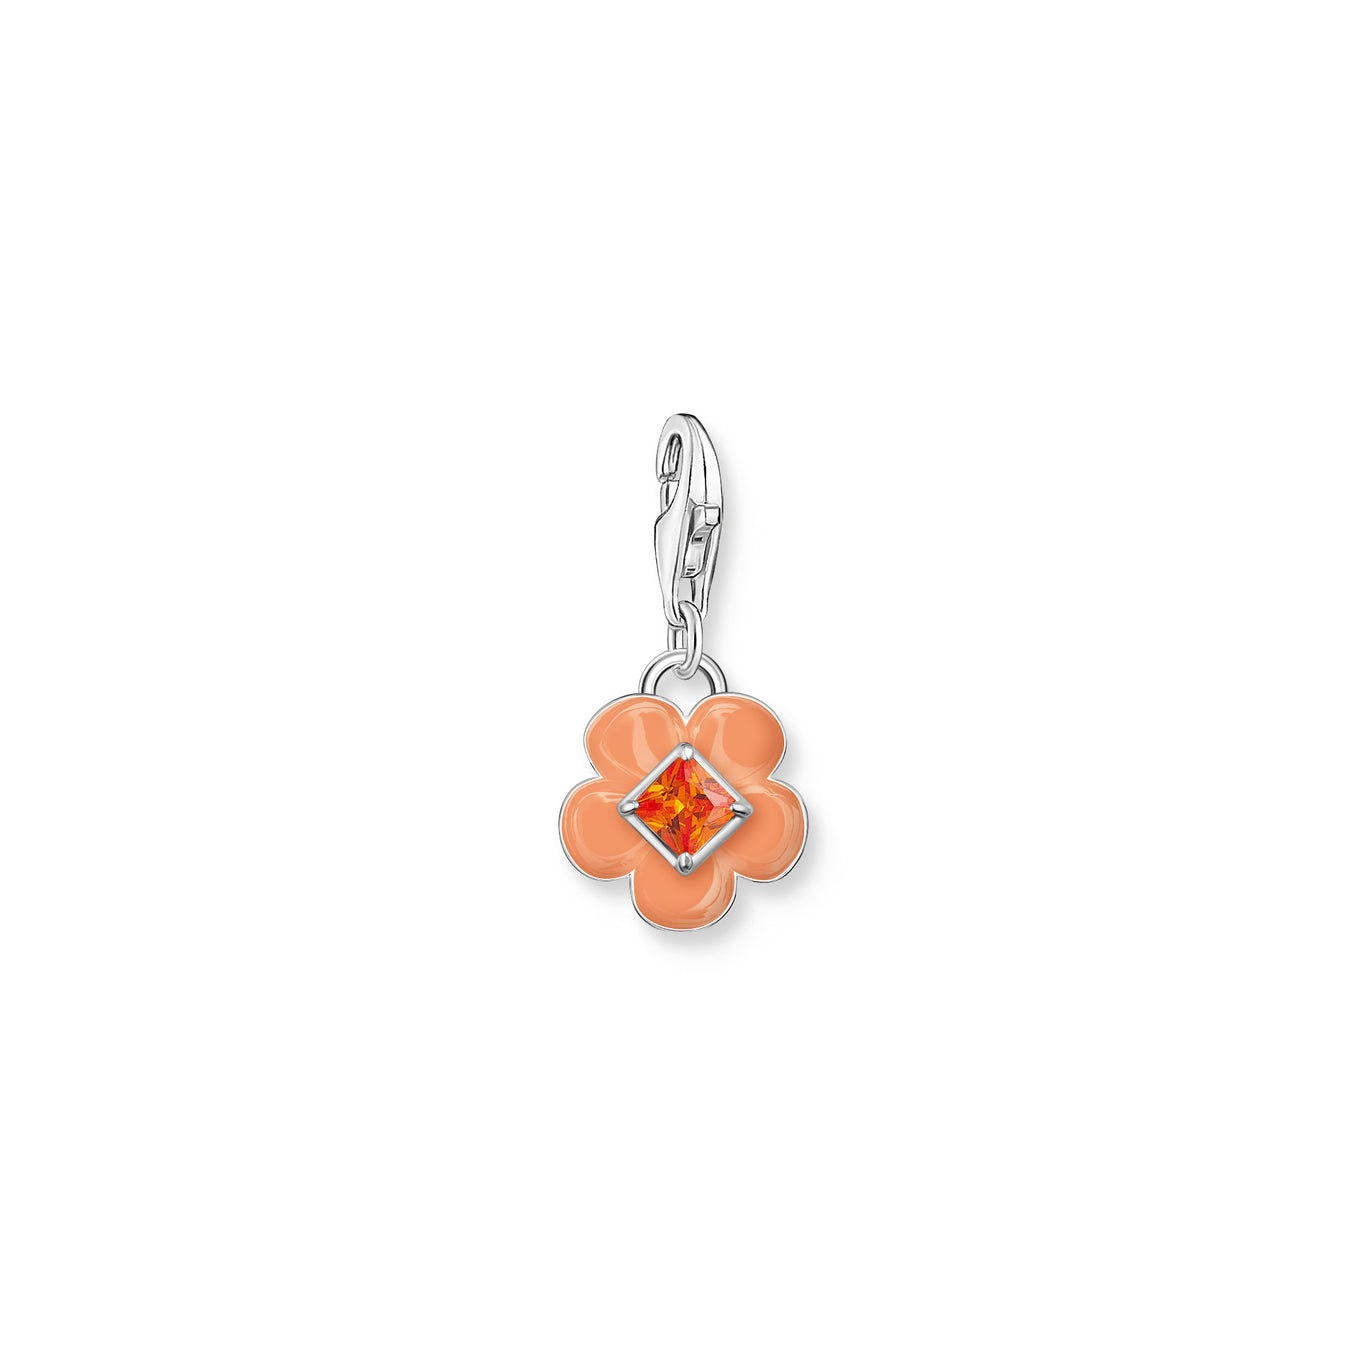 Thomas Sabo Orange Flower Charm with Orange Stone